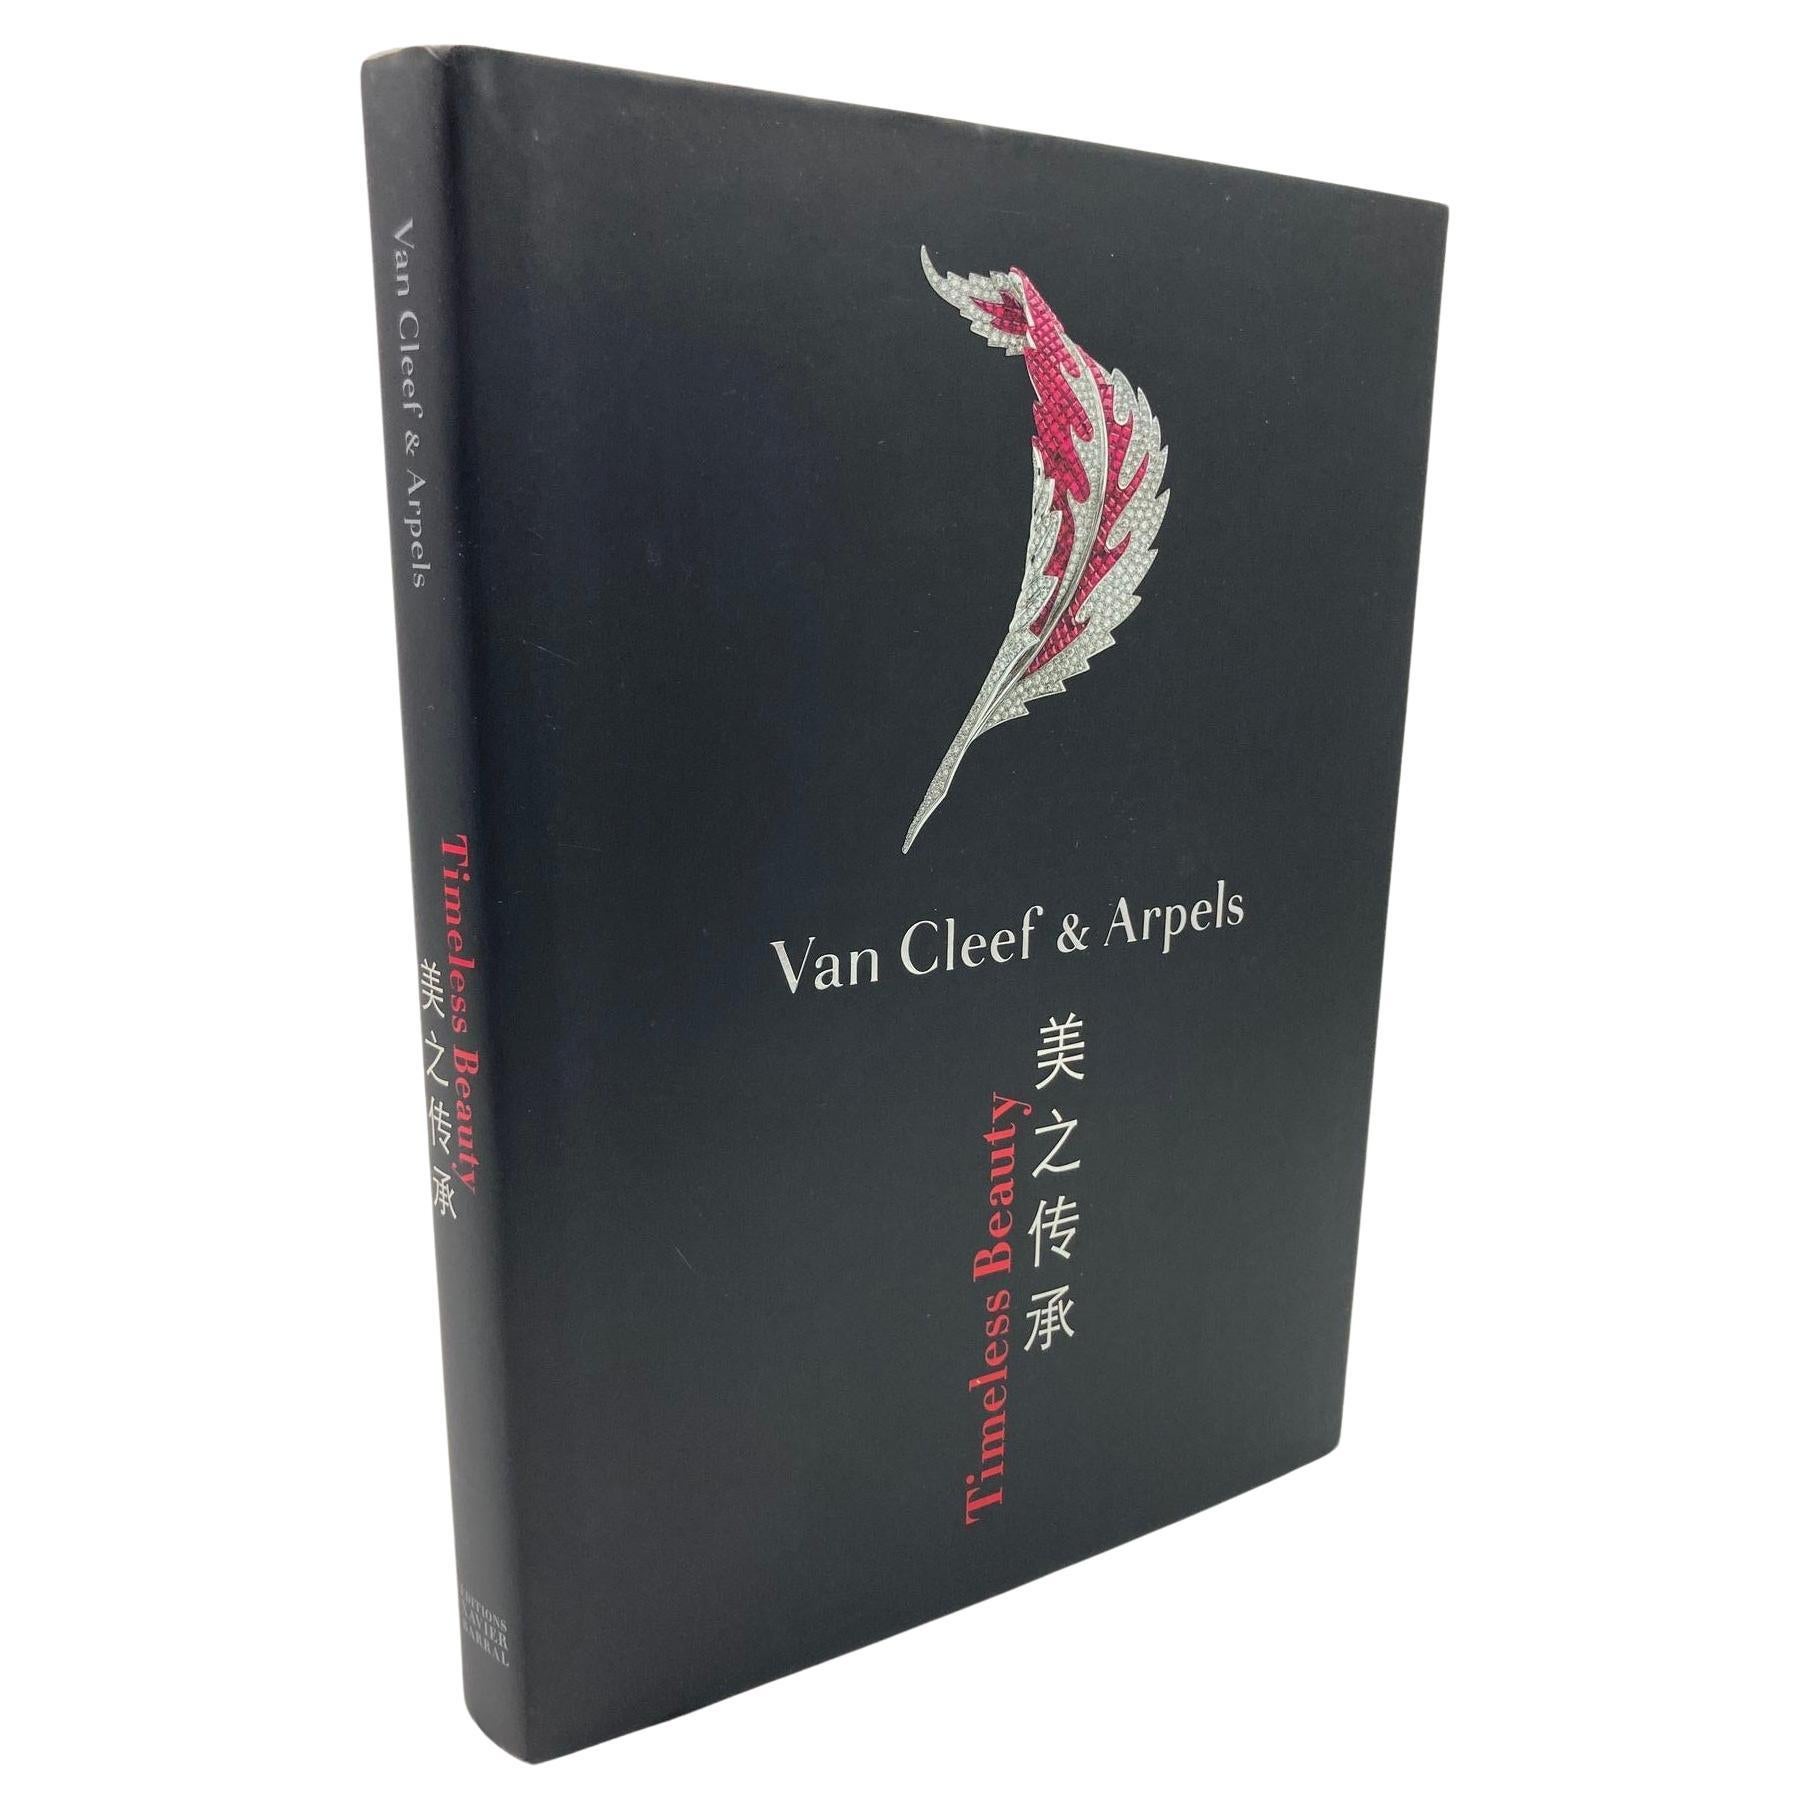 Van Cleef & Arpels: Timeless Beauty Hardcover Book 2012